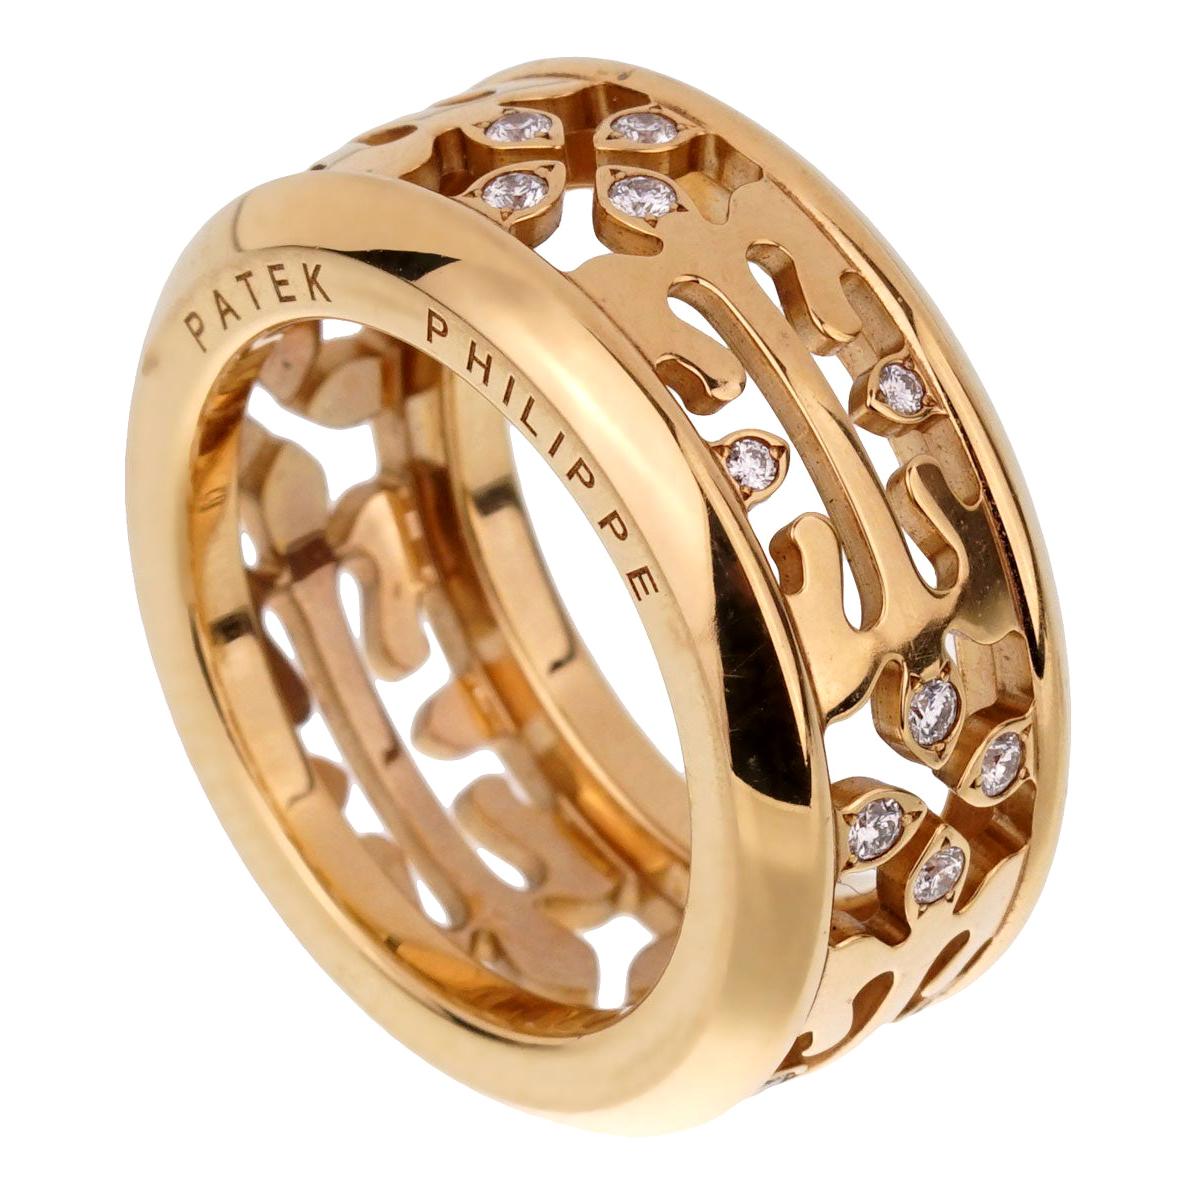 Patek Philippe Diamond Gold Calatrava Ring